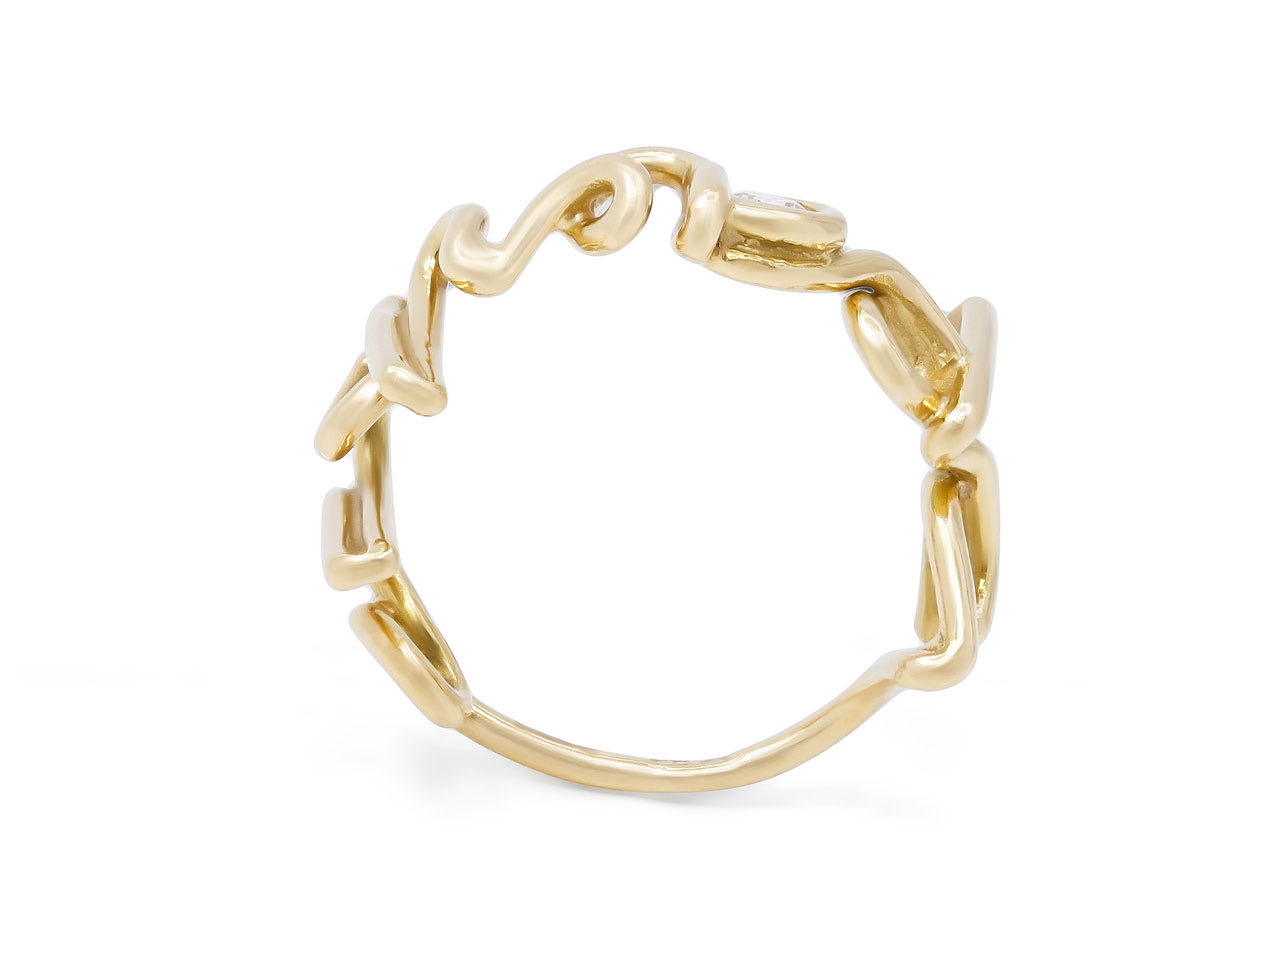 'Written' Ring in 18K Gold, by Solange Azagury-Partridge